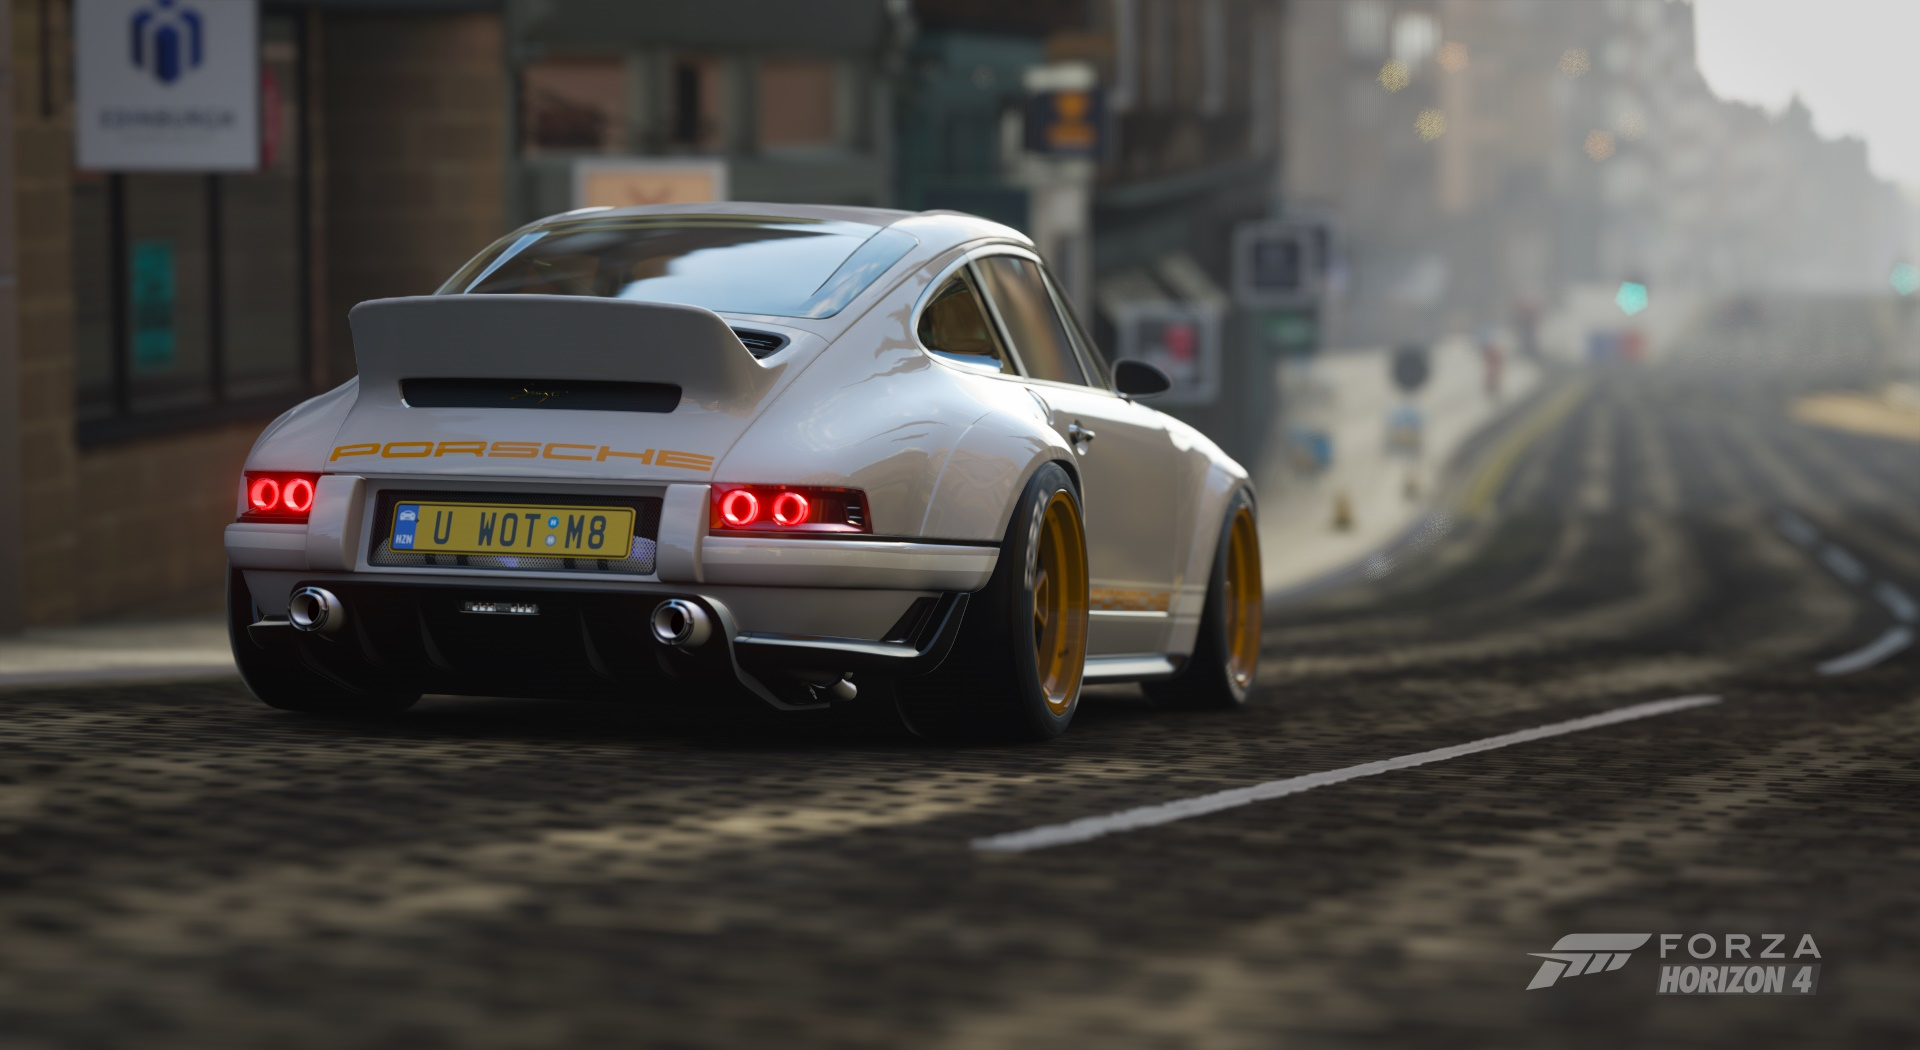 General 1920x1050 Forza Horizon 4 video games car screen shot stance (cars) tuning Porsche 911 Singer